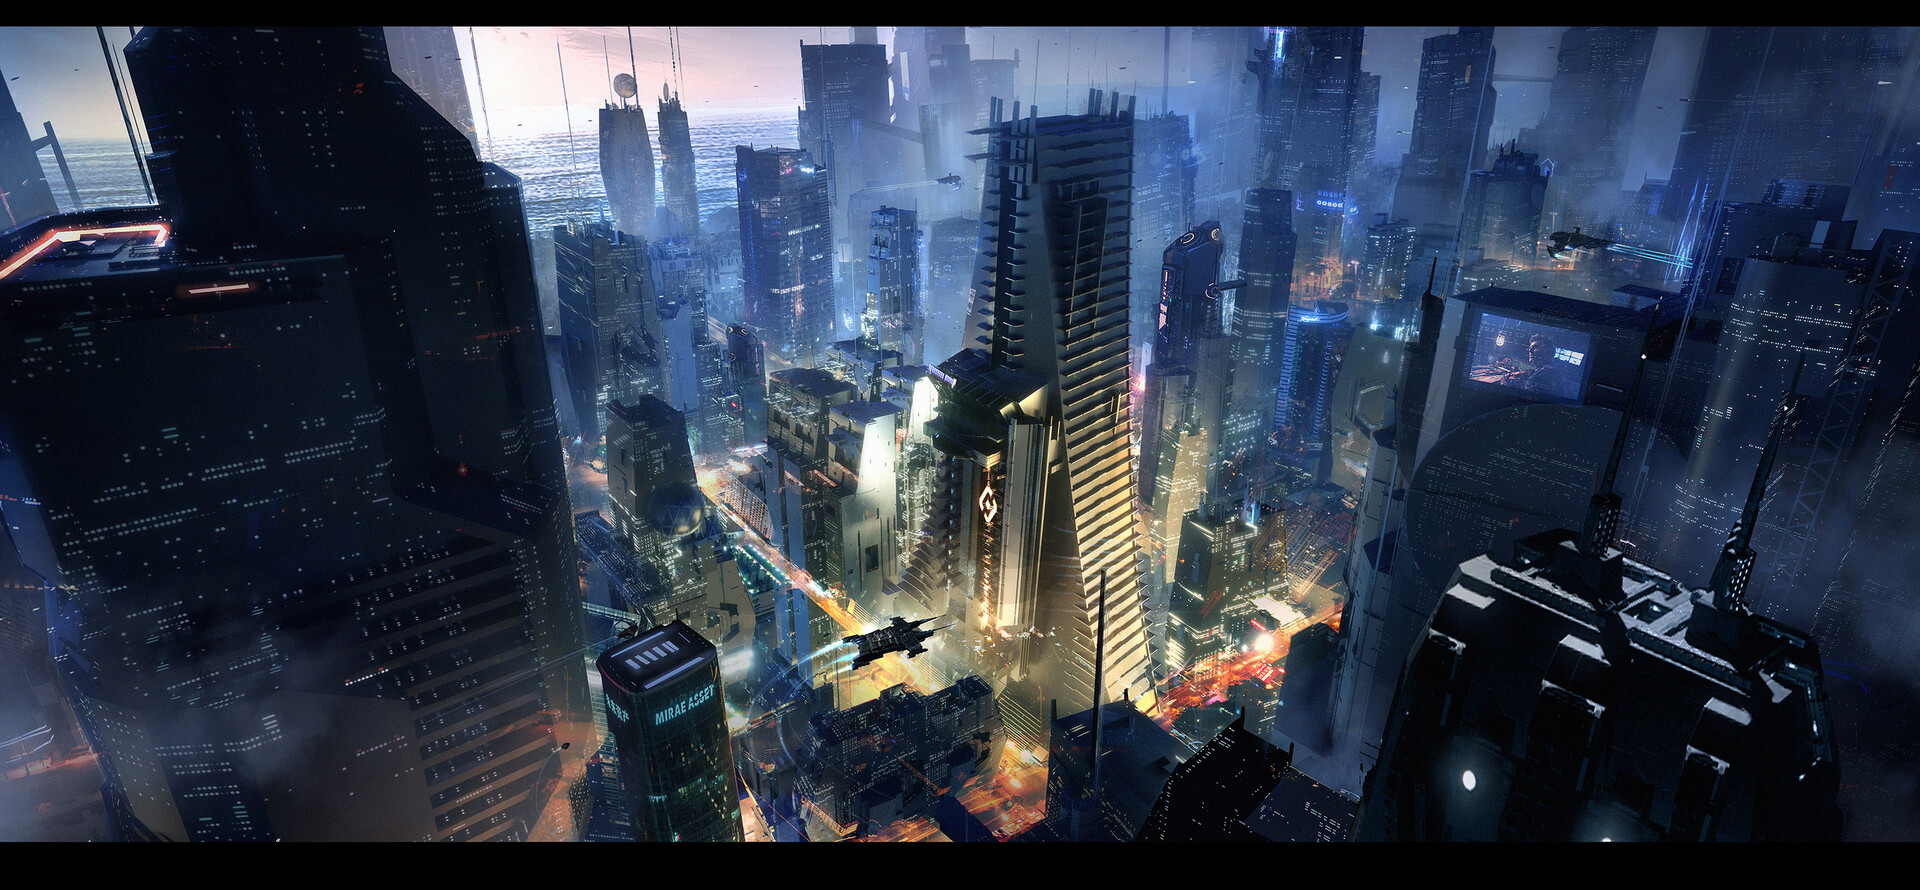 ArtStation - Cyberpunk Science Fiction City